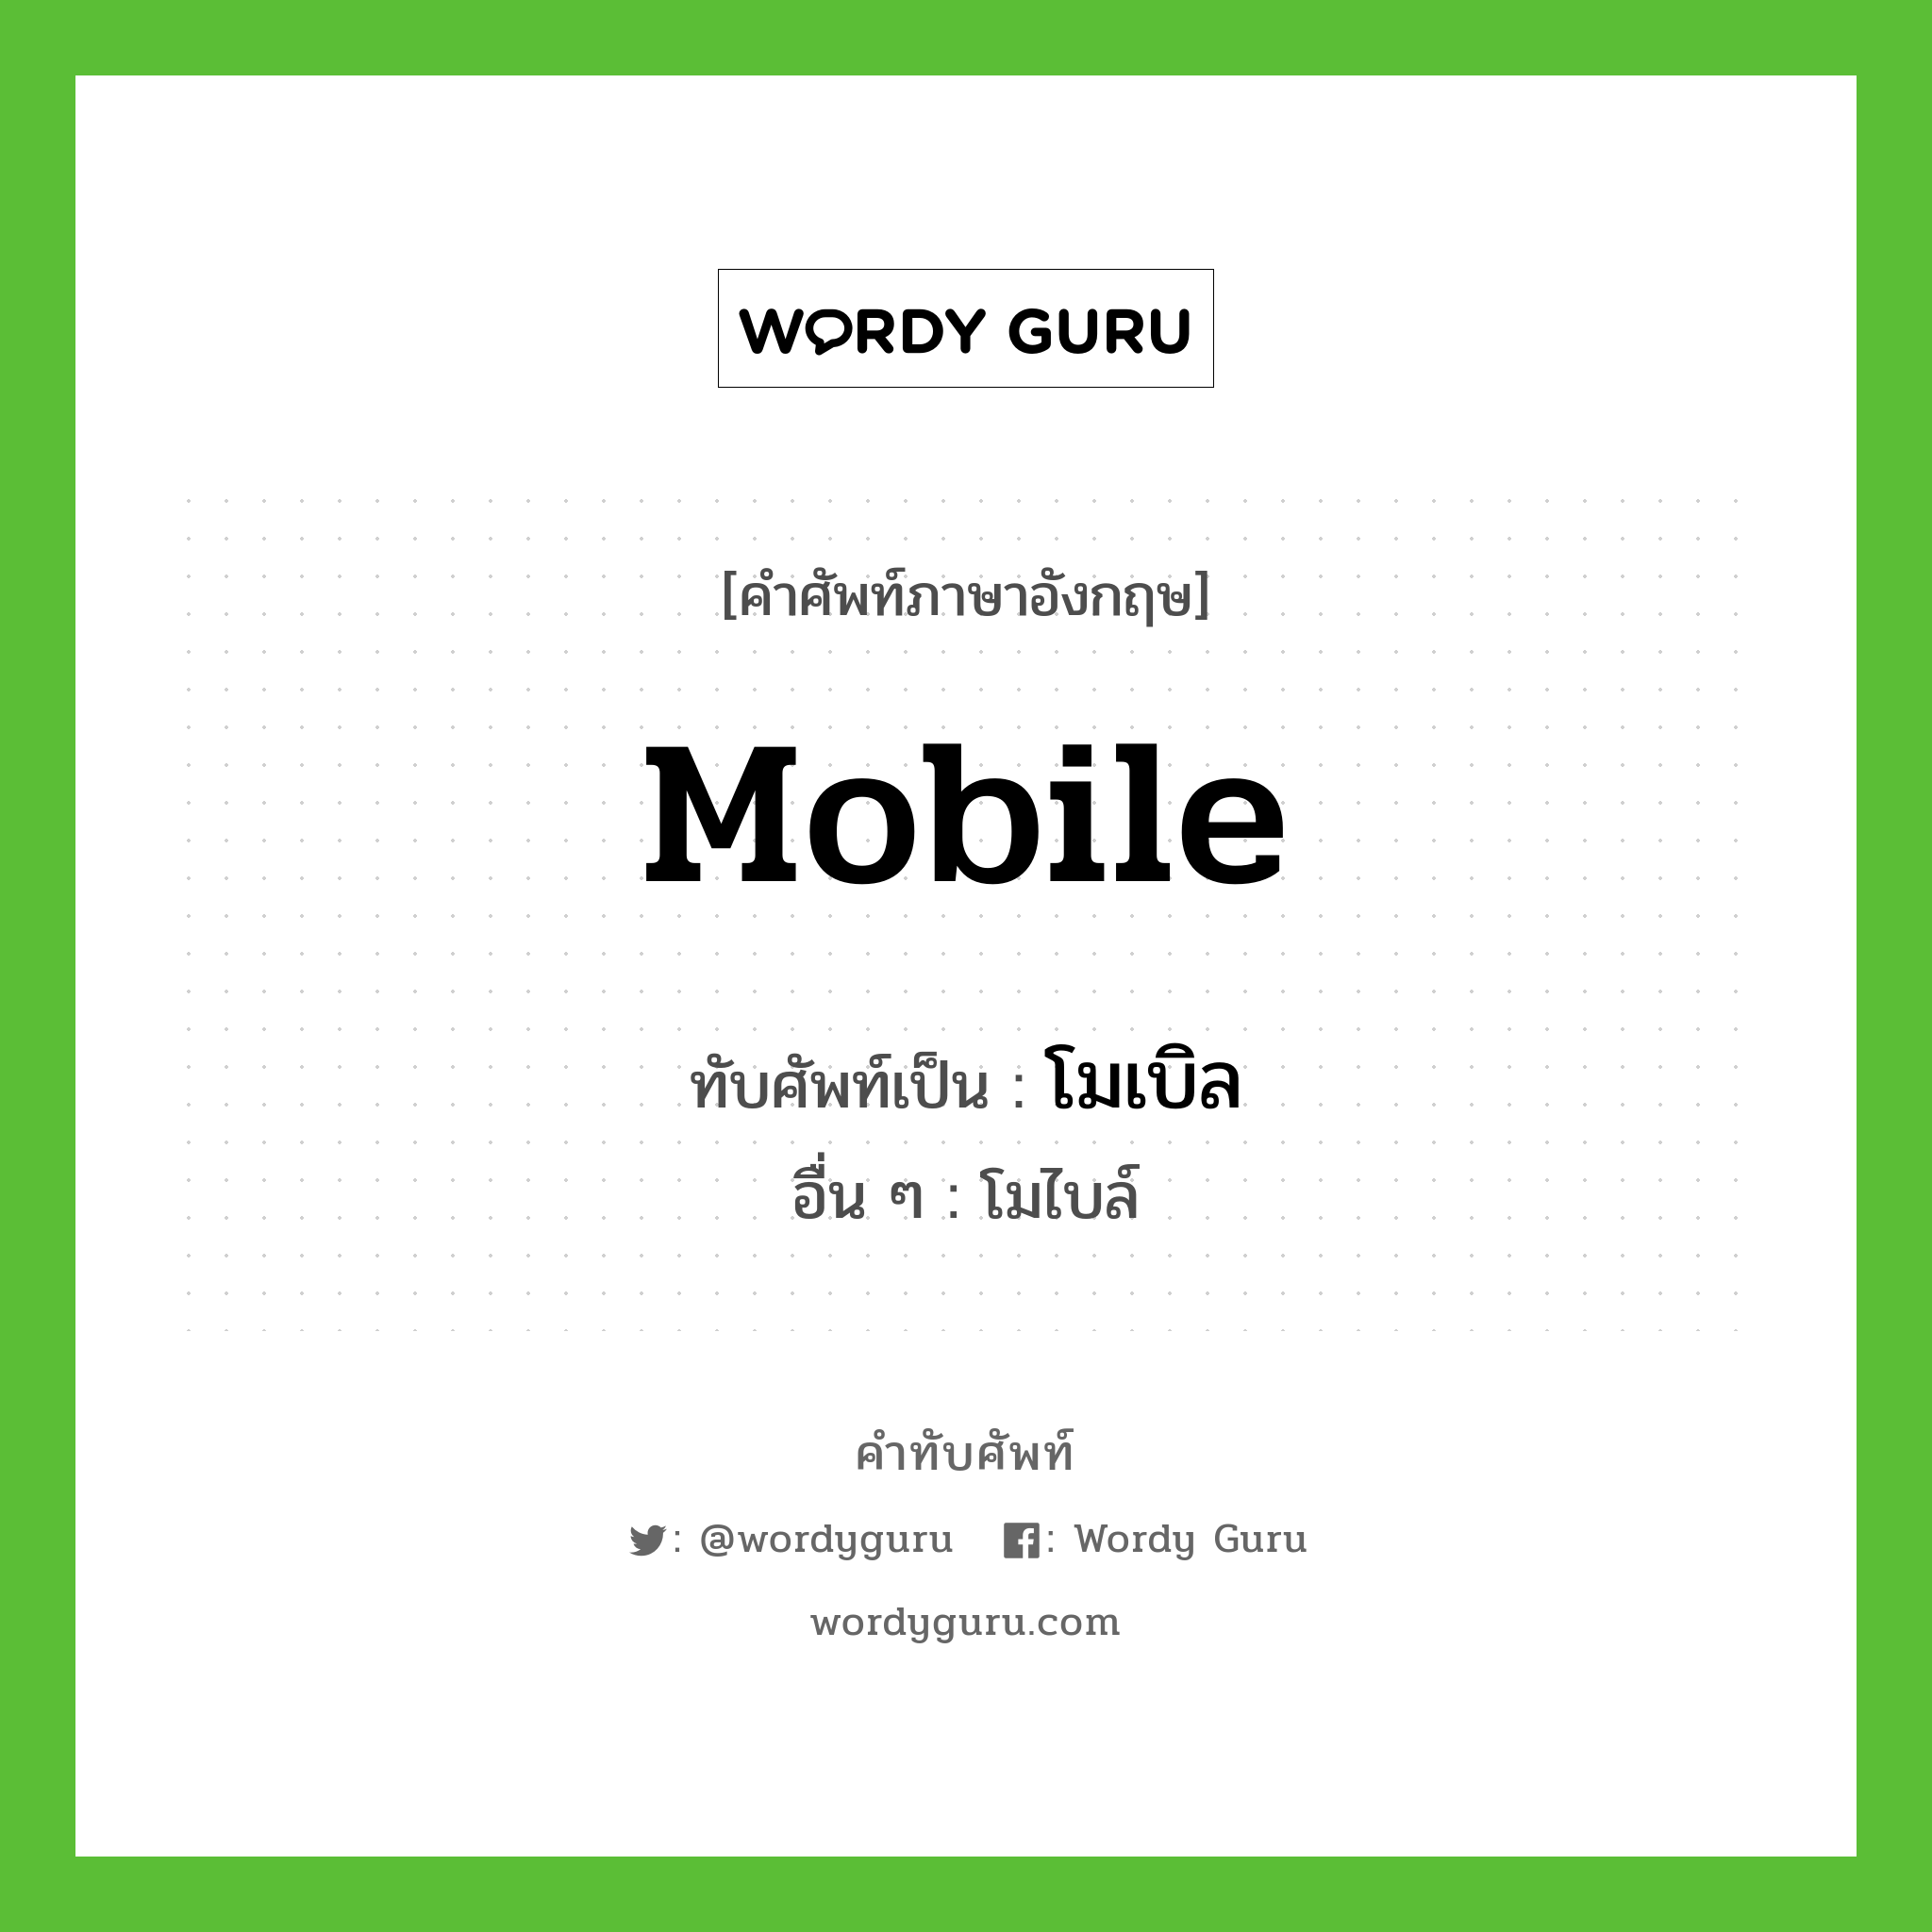 mobile เขียนเป็นคำไทยว่าอะไร?, คำศัพท์ภาษาอังกฤษ mobile ทับศัพท์เป็น โมเบิล อื่น ๆ โมไบล์